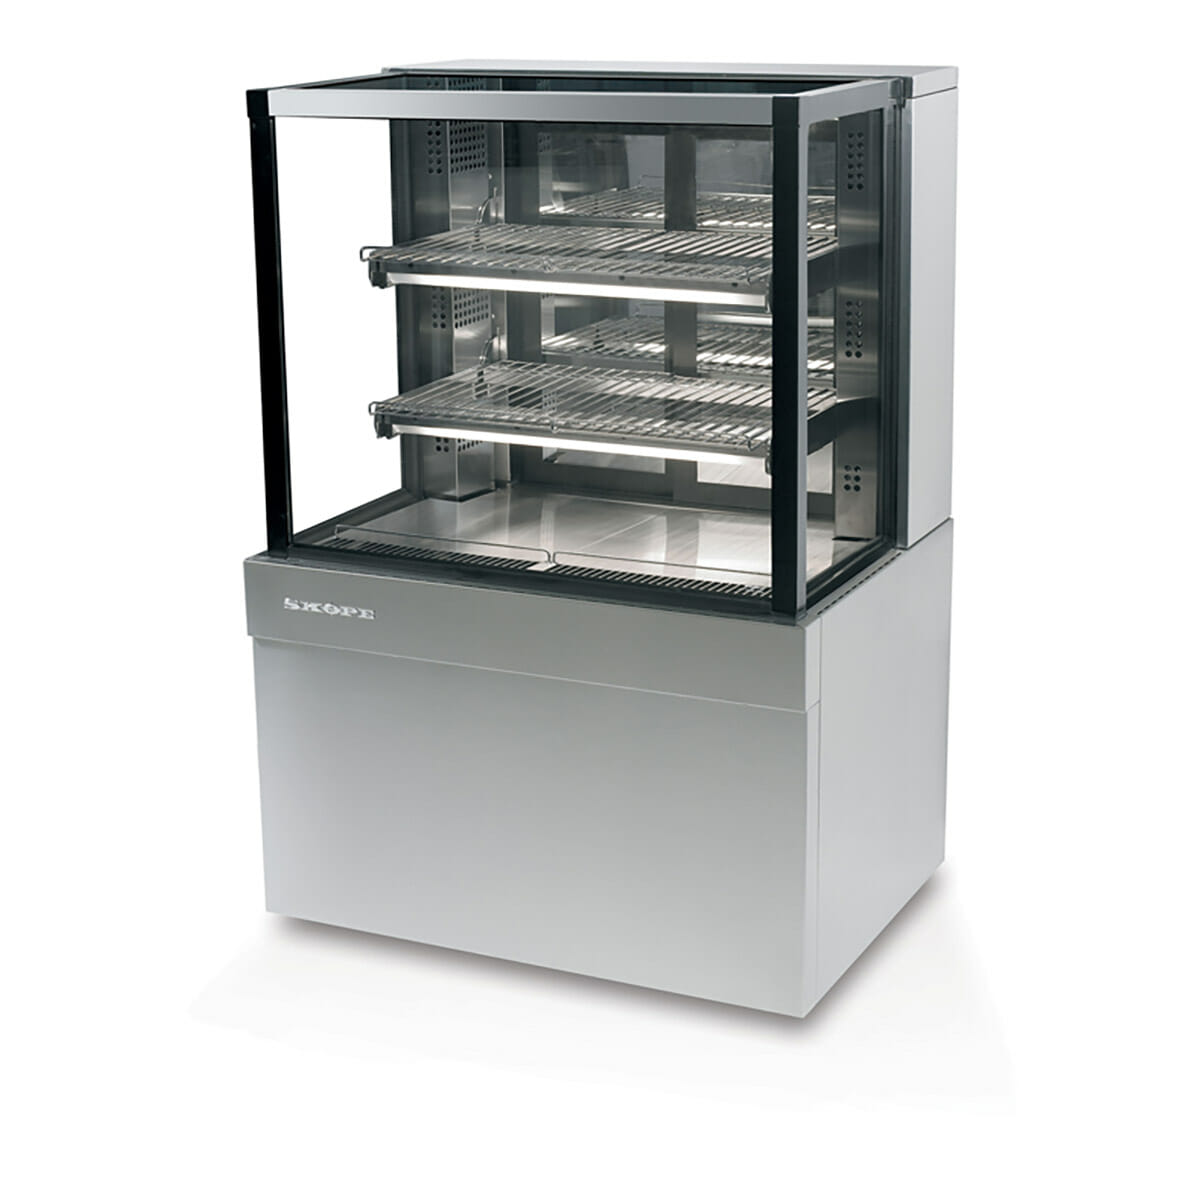 Skope Fdm900a Refrigerated Food Display Cabinet Ambient Hiller